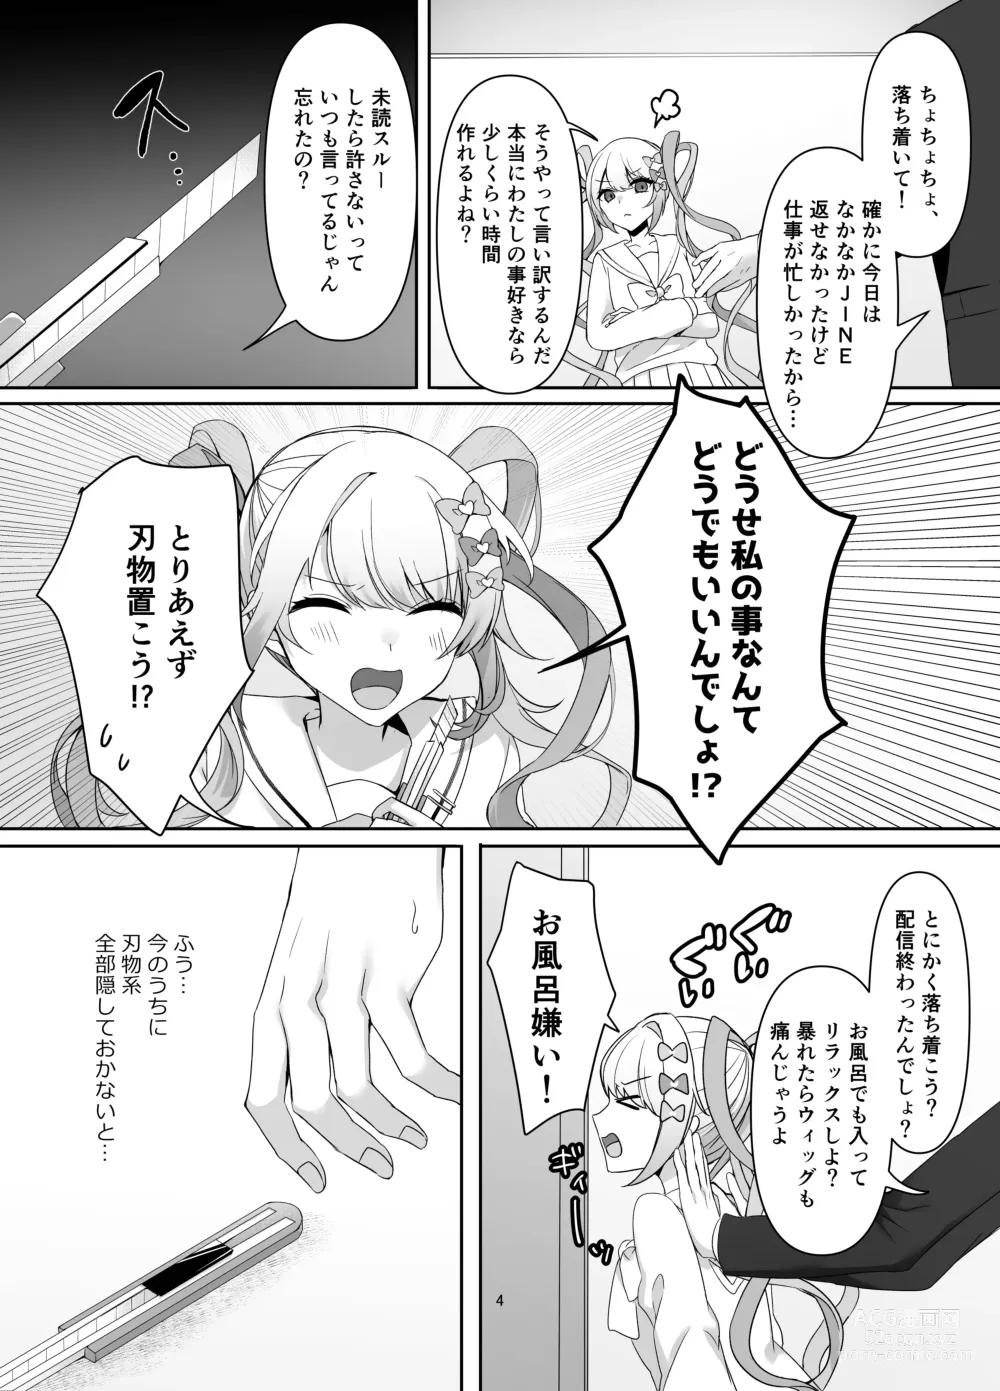 Page 4 of doujinshi Boku wa Ame-chan ni Sakaraenai - I cant resist Ame-chan.